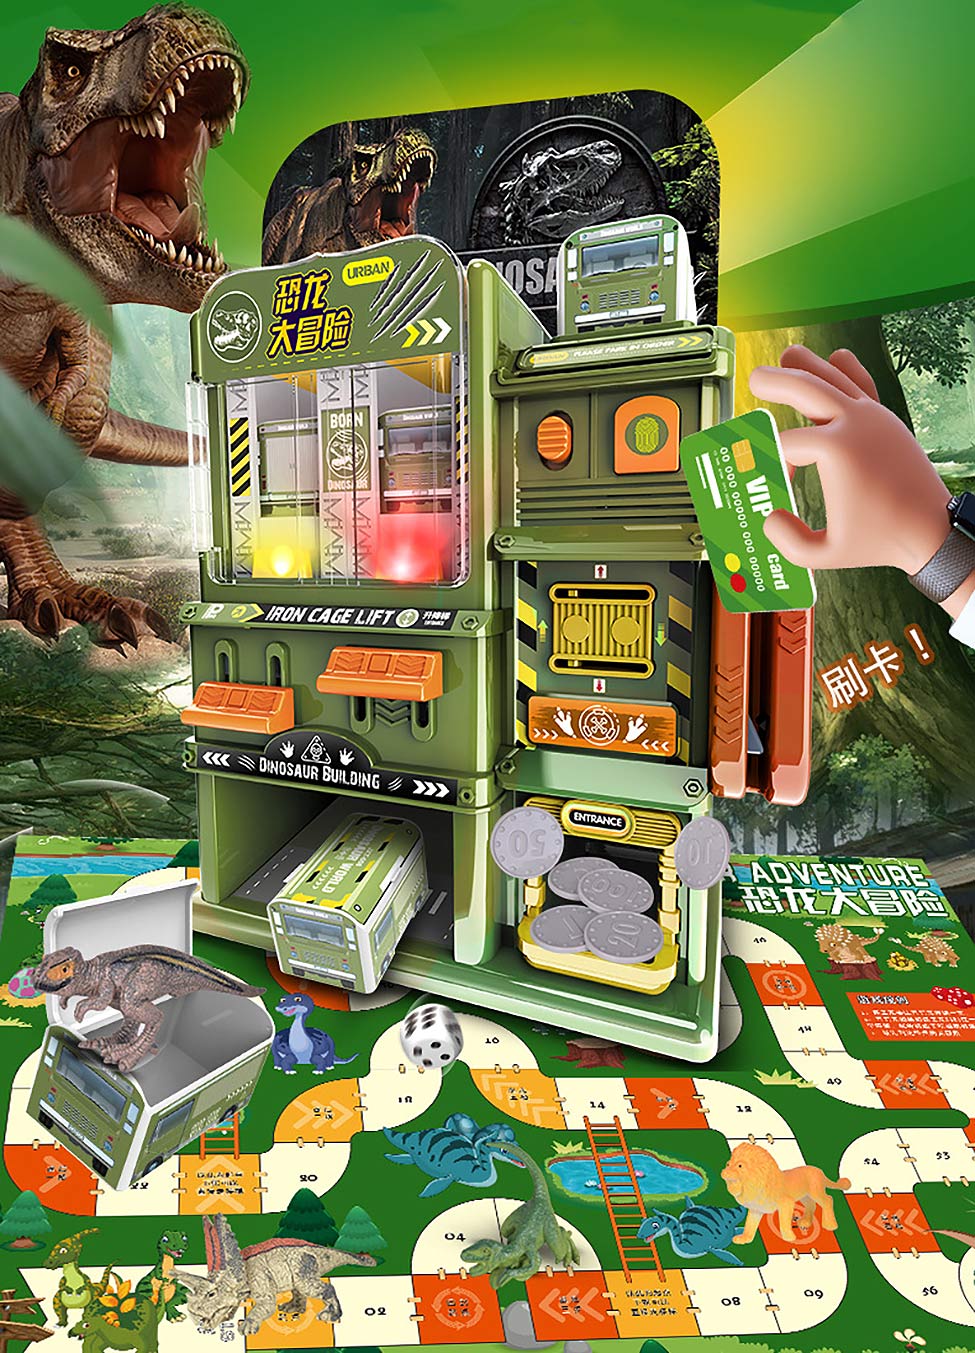 Automatic-Dinosaur-Building-Vending-Machine-Toy-with-10-Dinosaur-Figurine-6